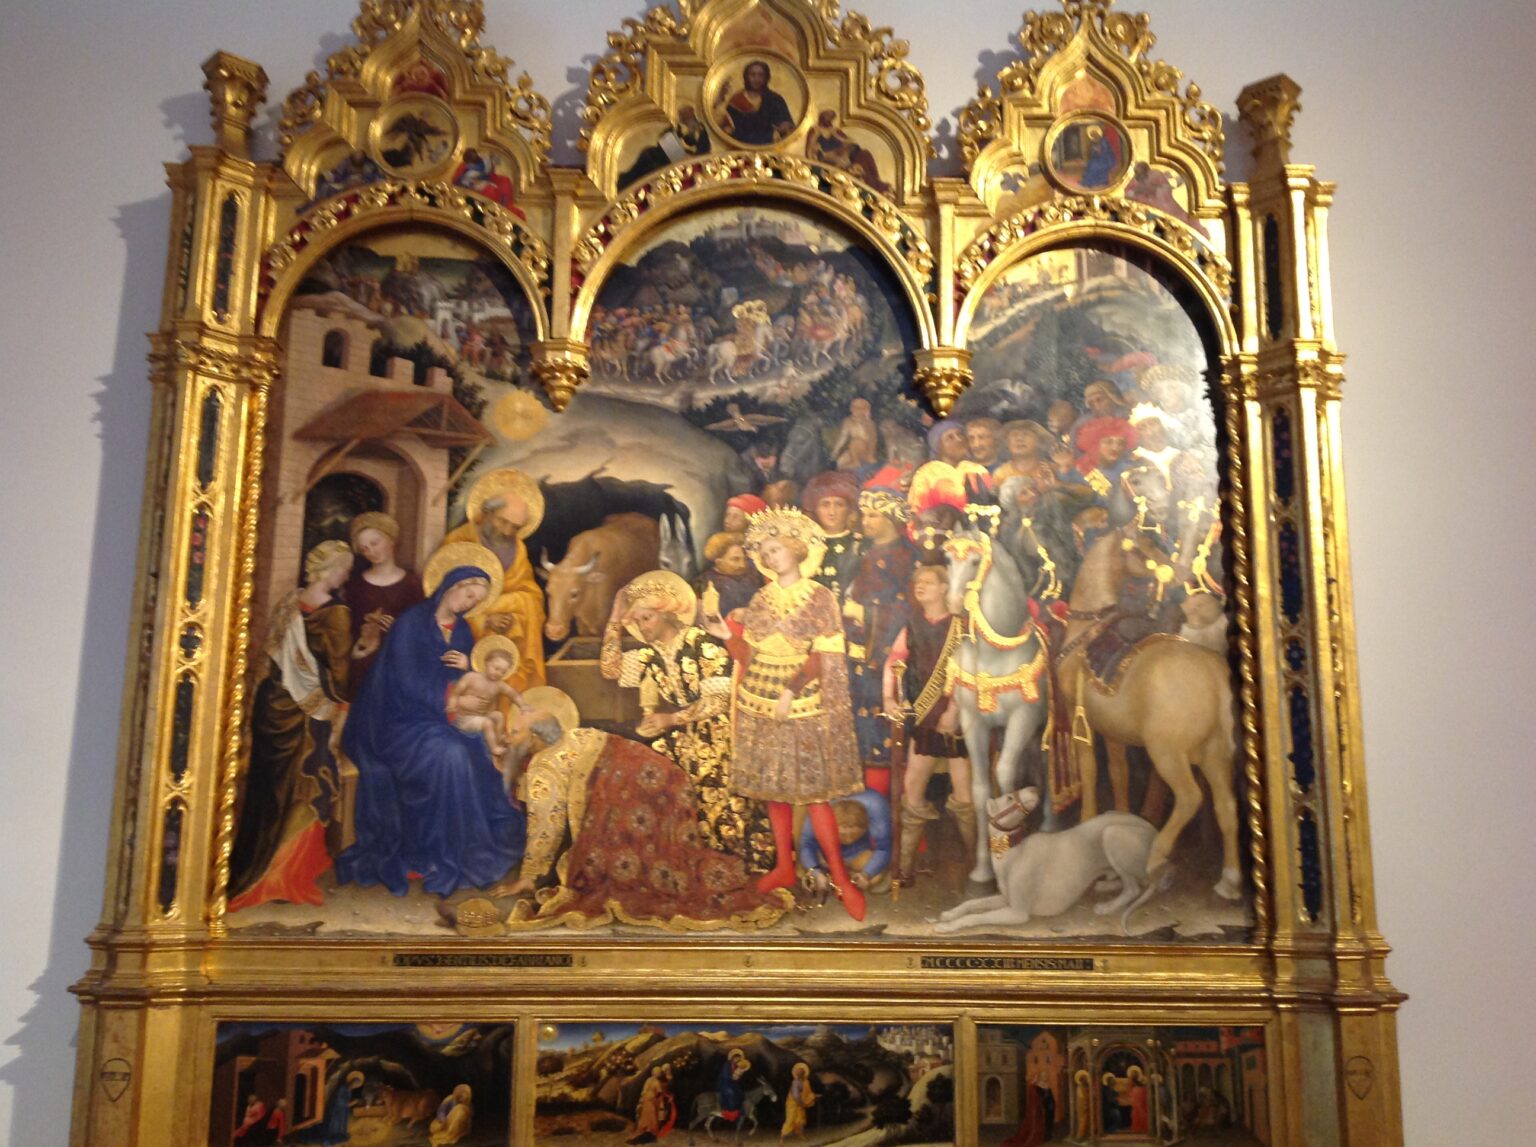 Religious art of the Uffizi